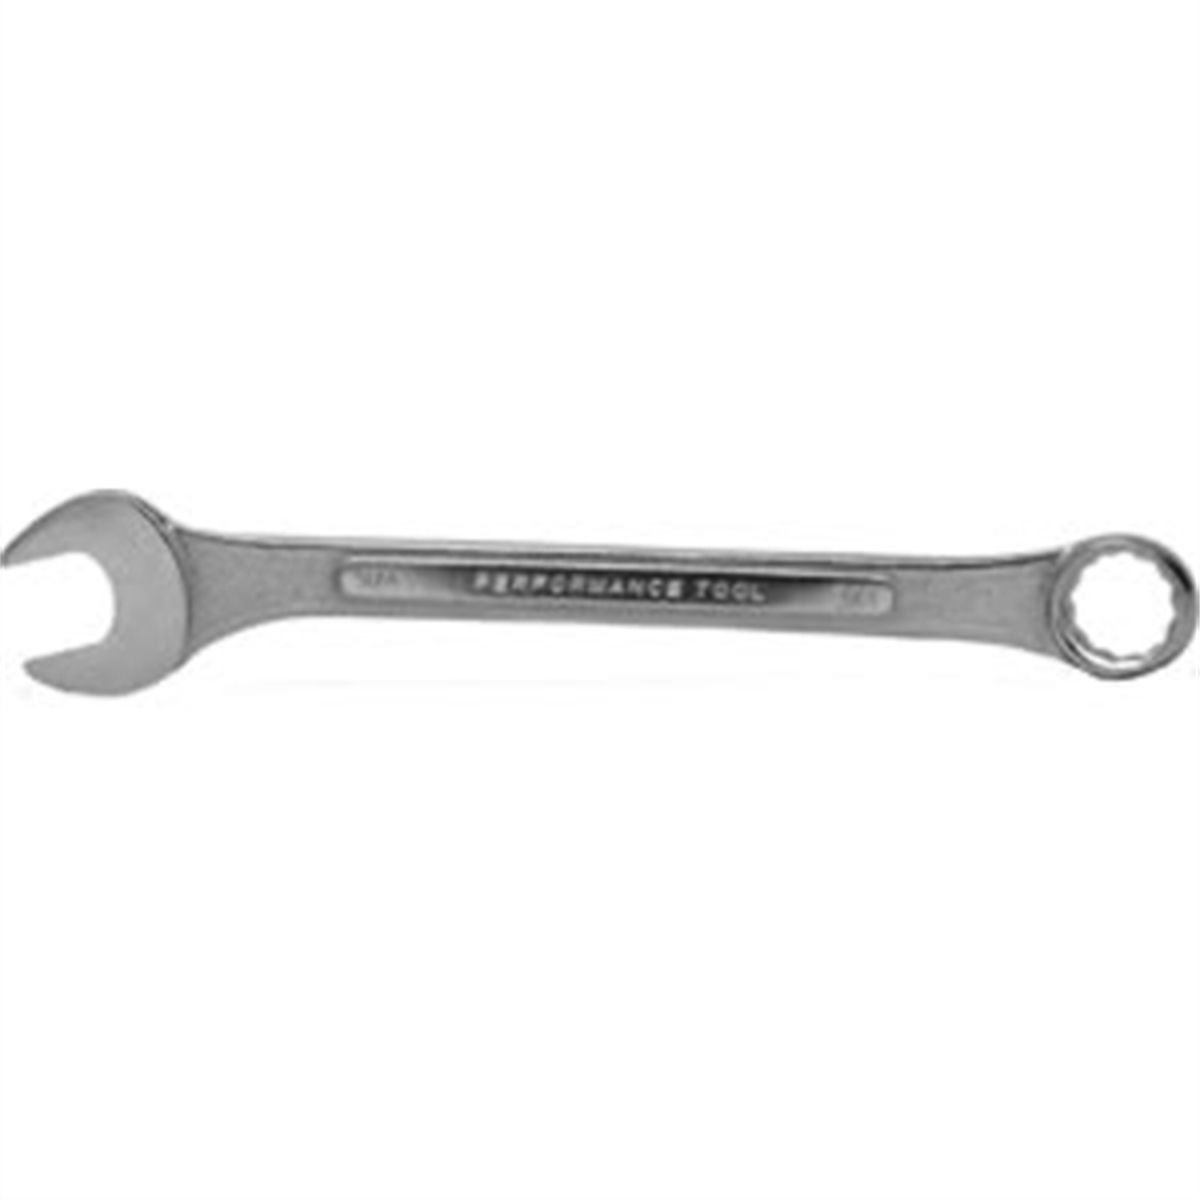 1-1/2" SAE Comb Wrench (Bulk)